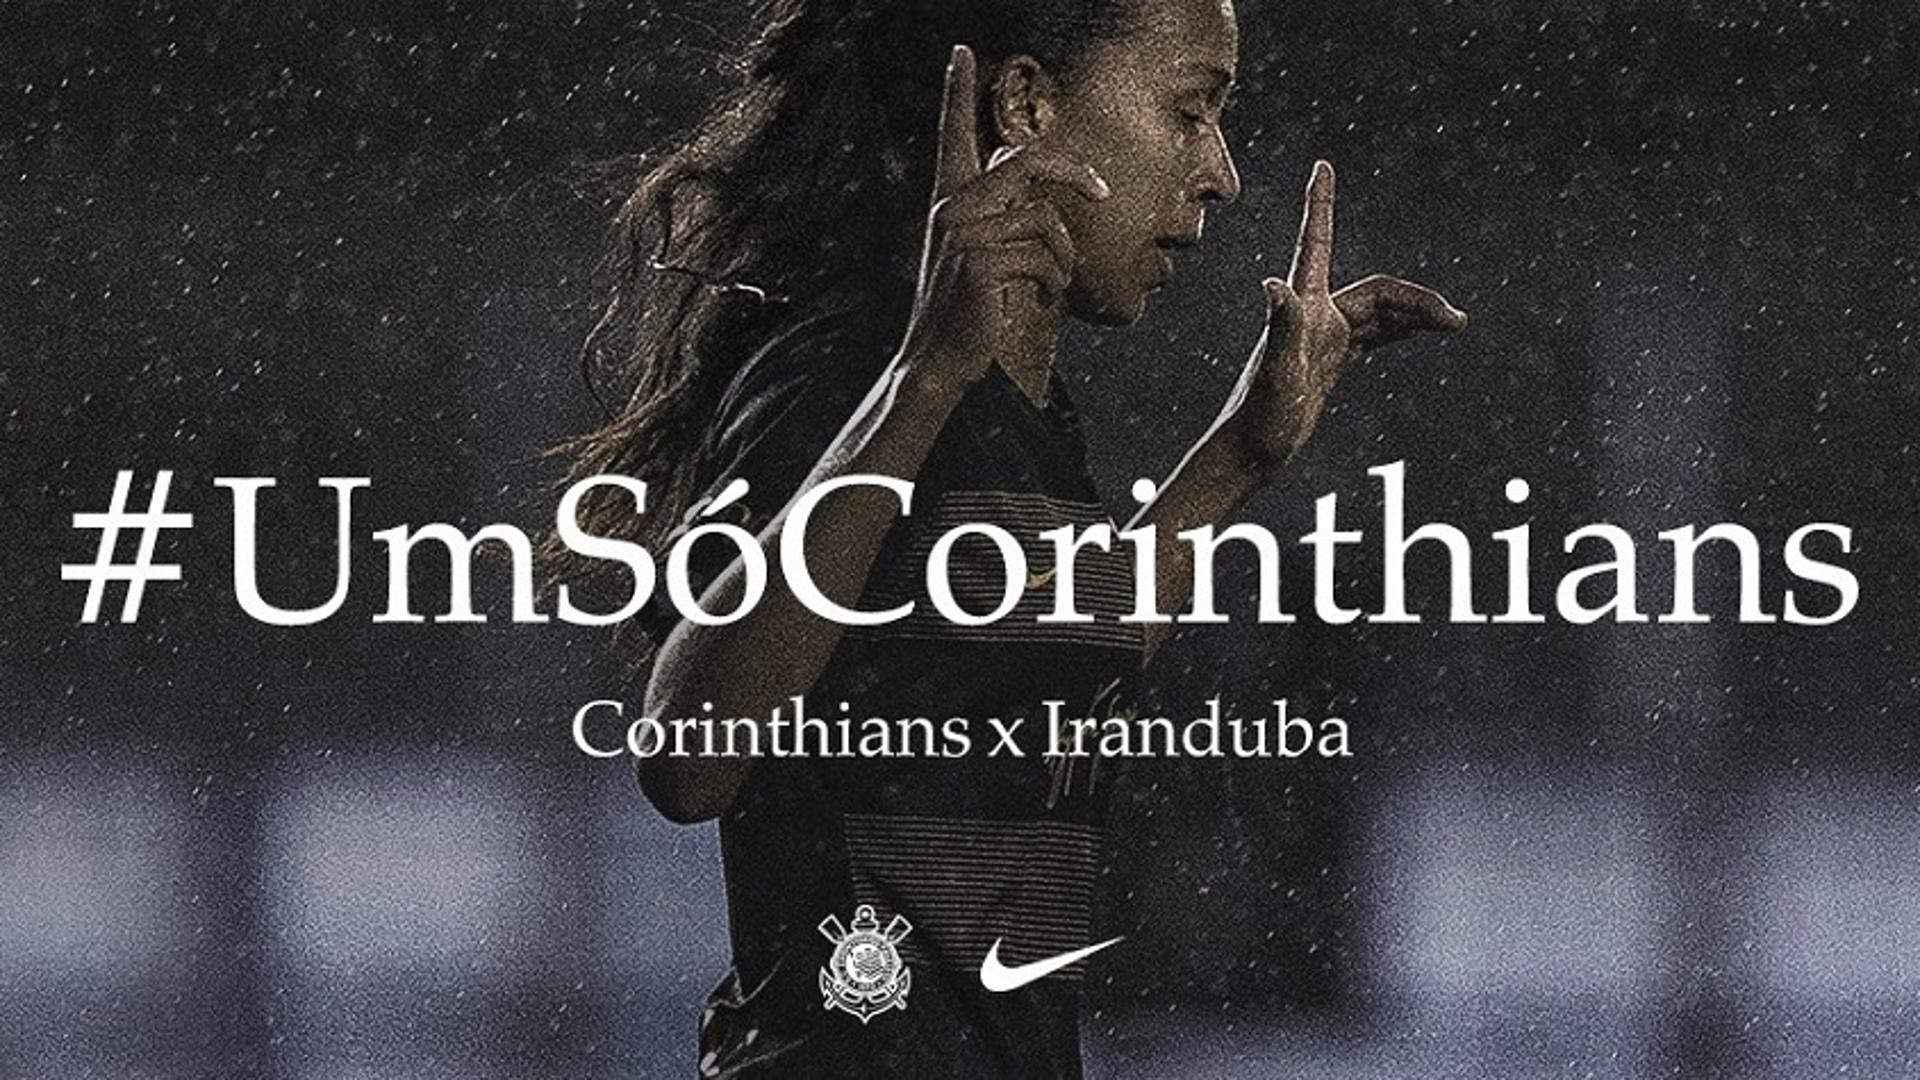 Um Só Corinthians